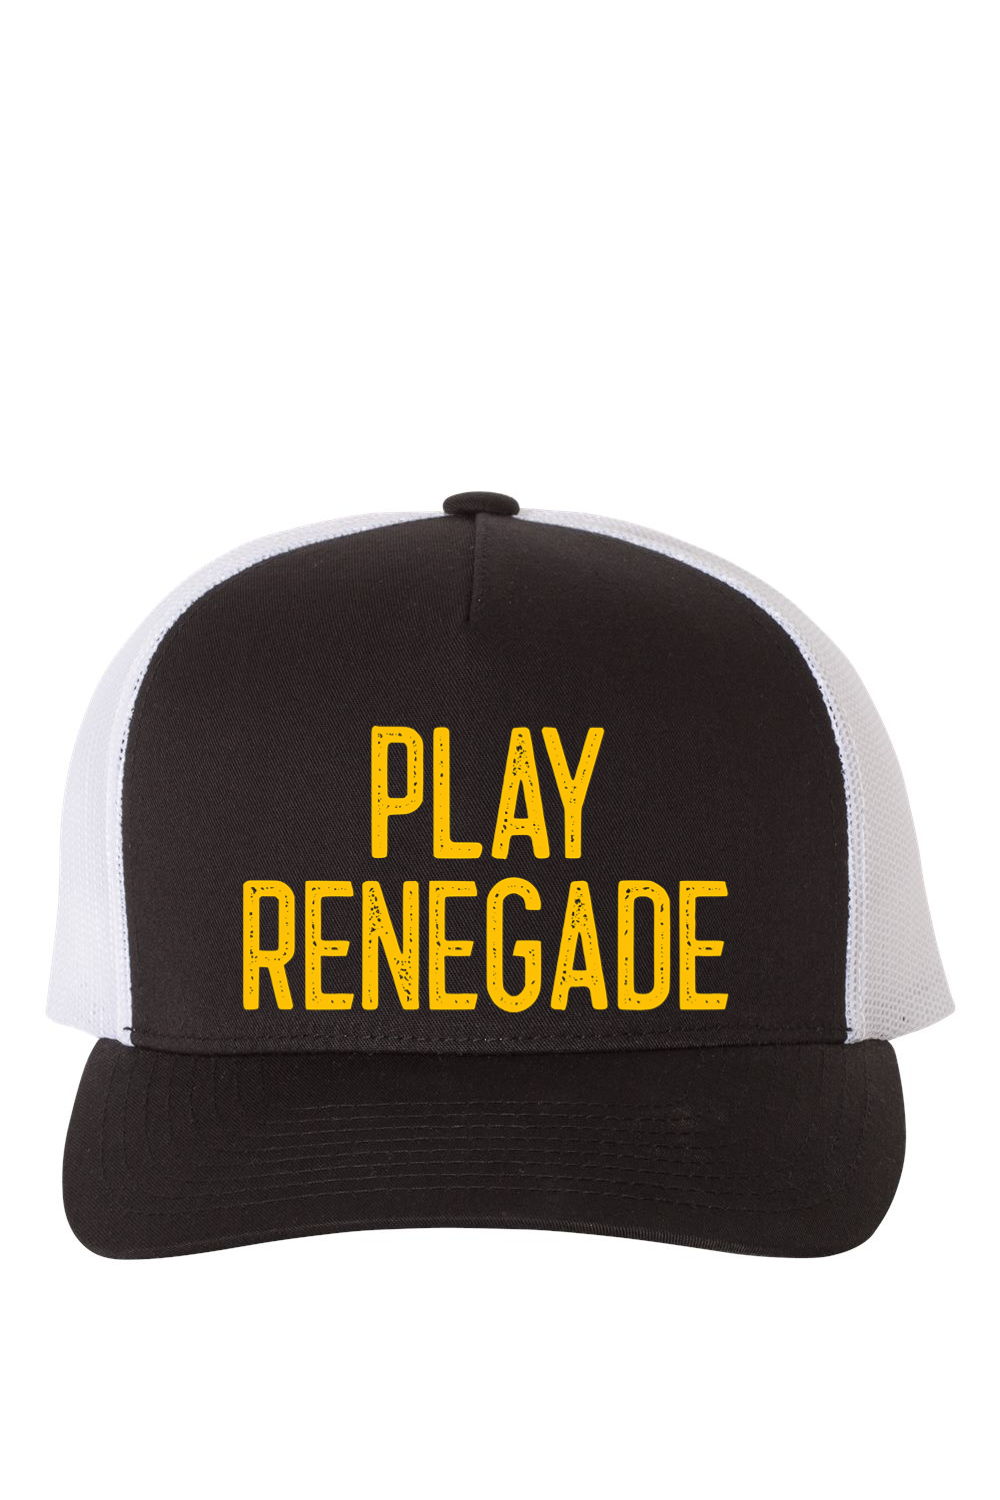 Play Renegade - Classic Snapback Hat - Yinzylvania